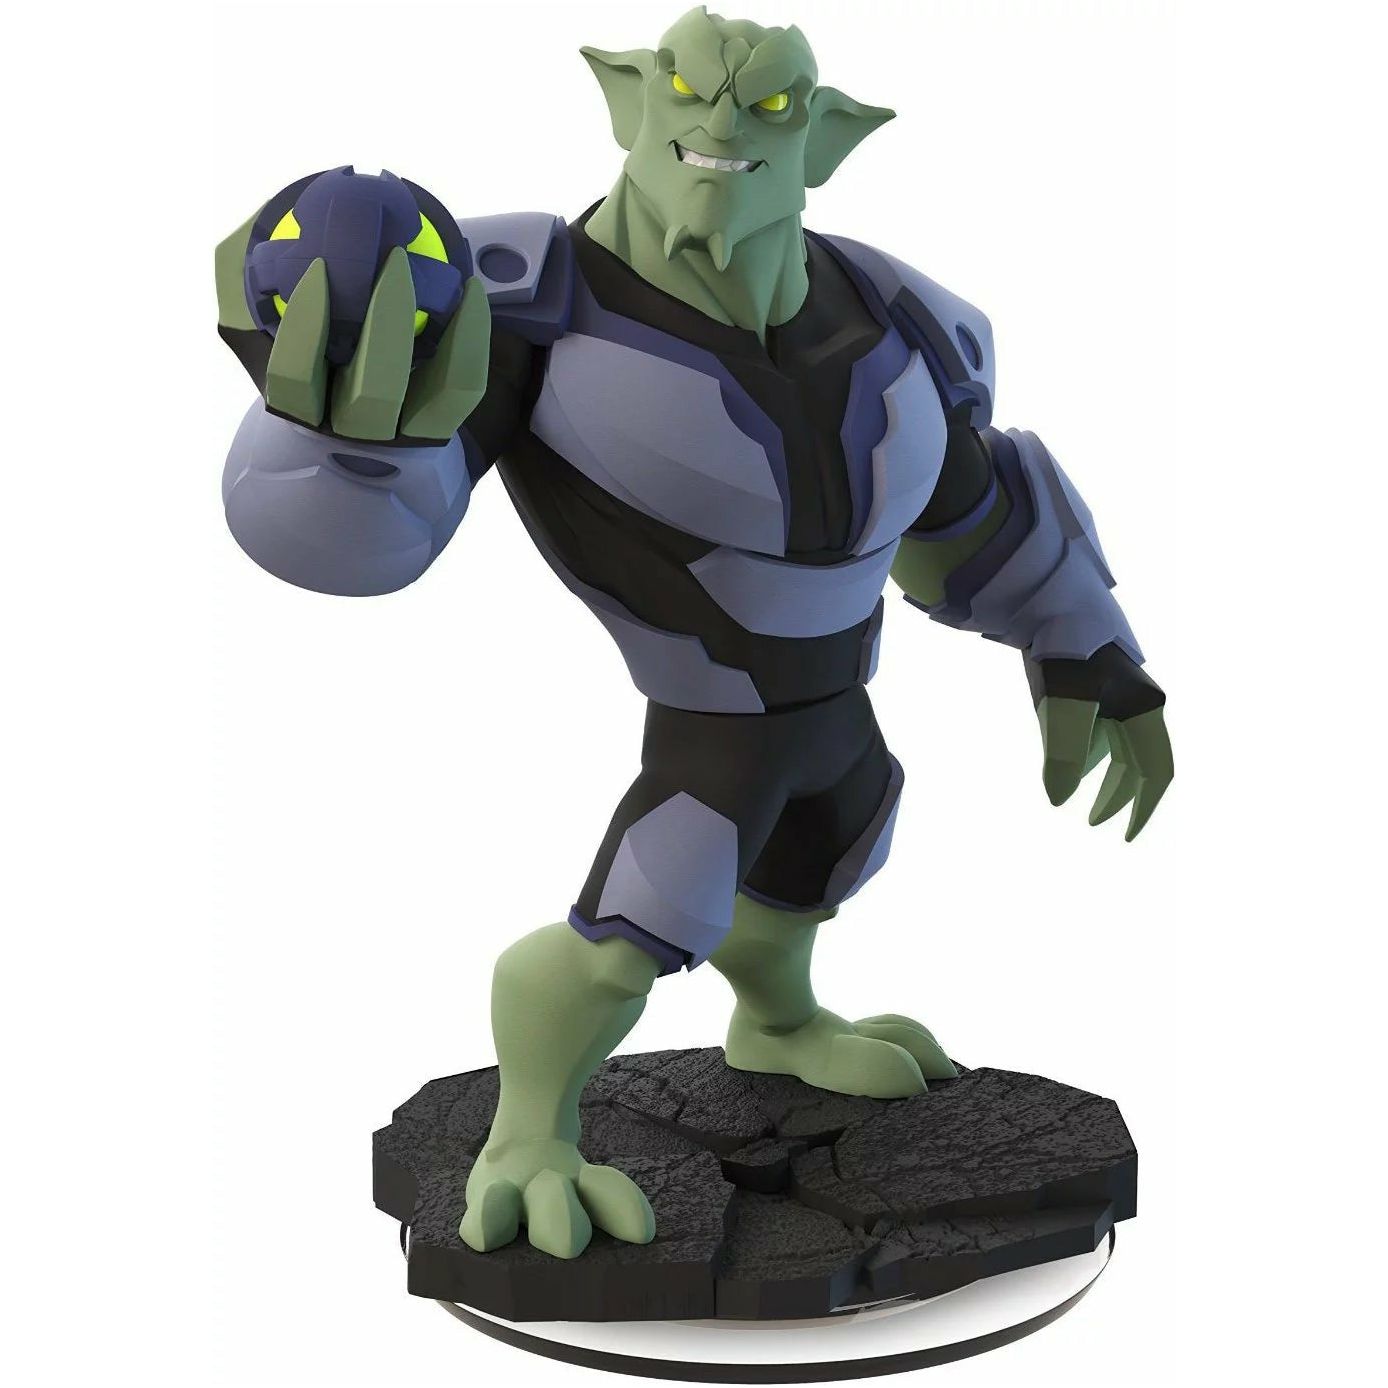 Disney Infinity 2.0 - Green Goblin Figure